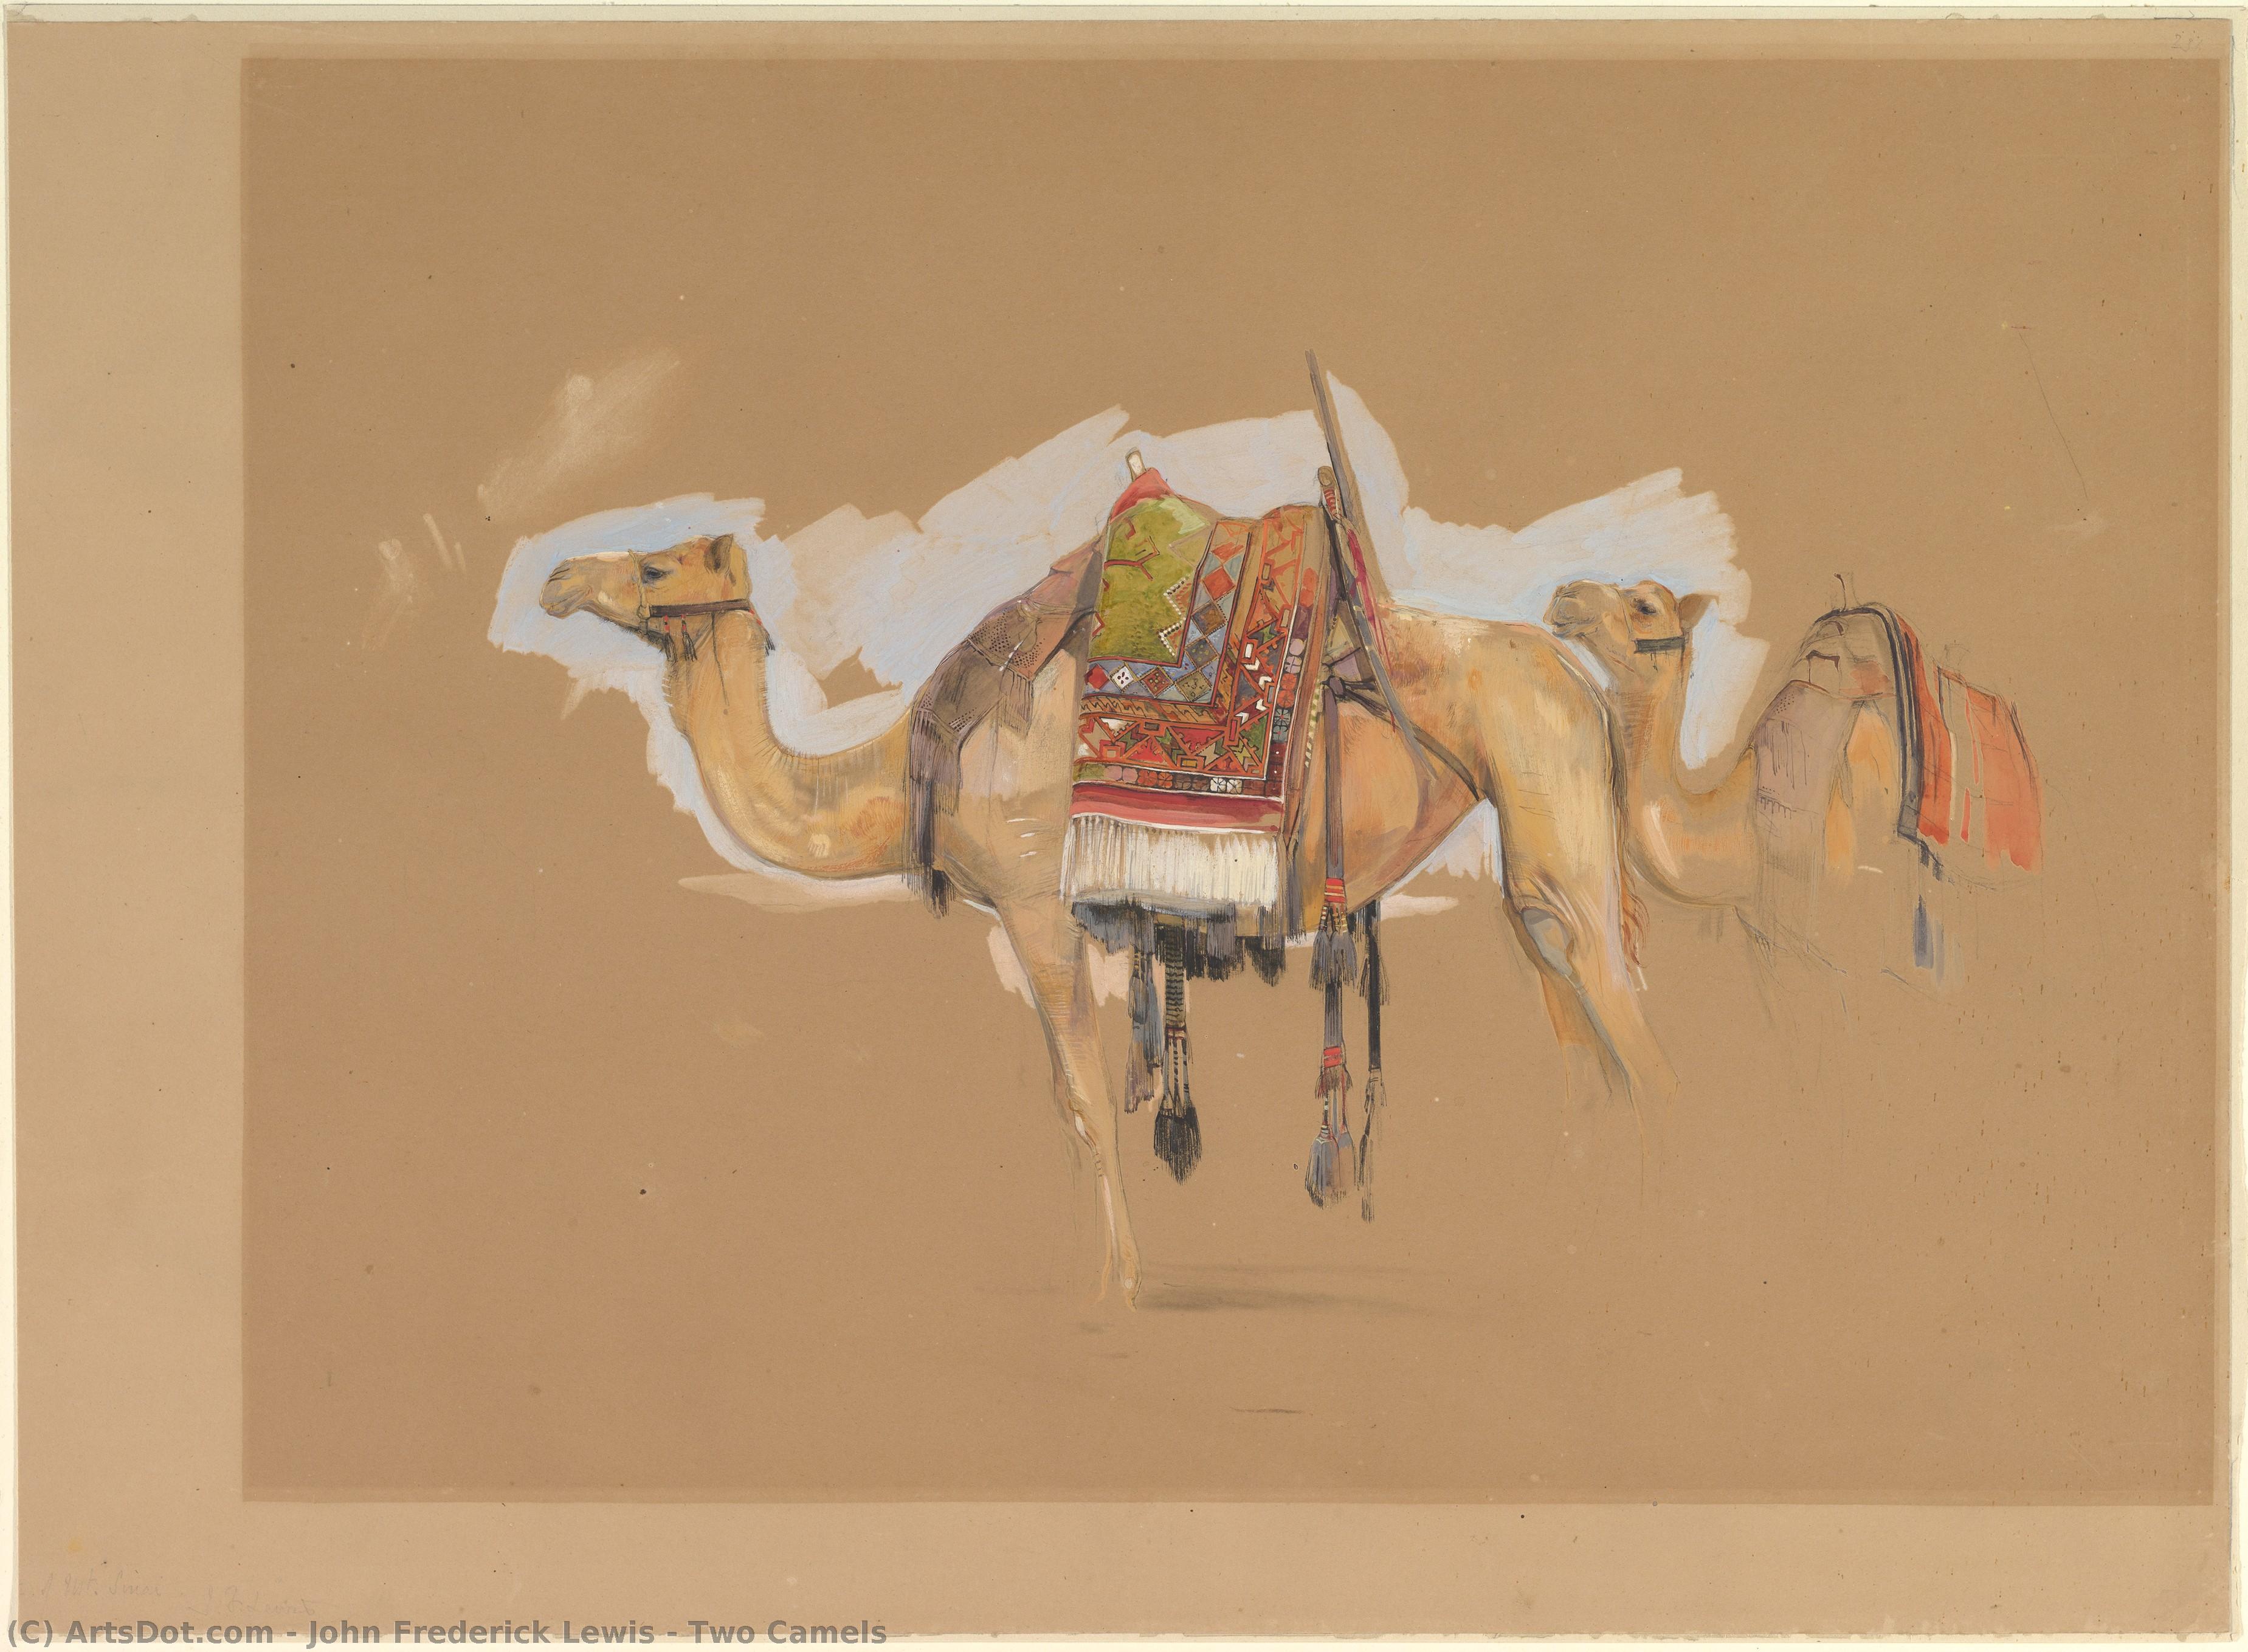  Art Reproductions Two Camels, 1843 by John Frederick Lewis (1804-1876, United Kingdom) | ArtsDot.com